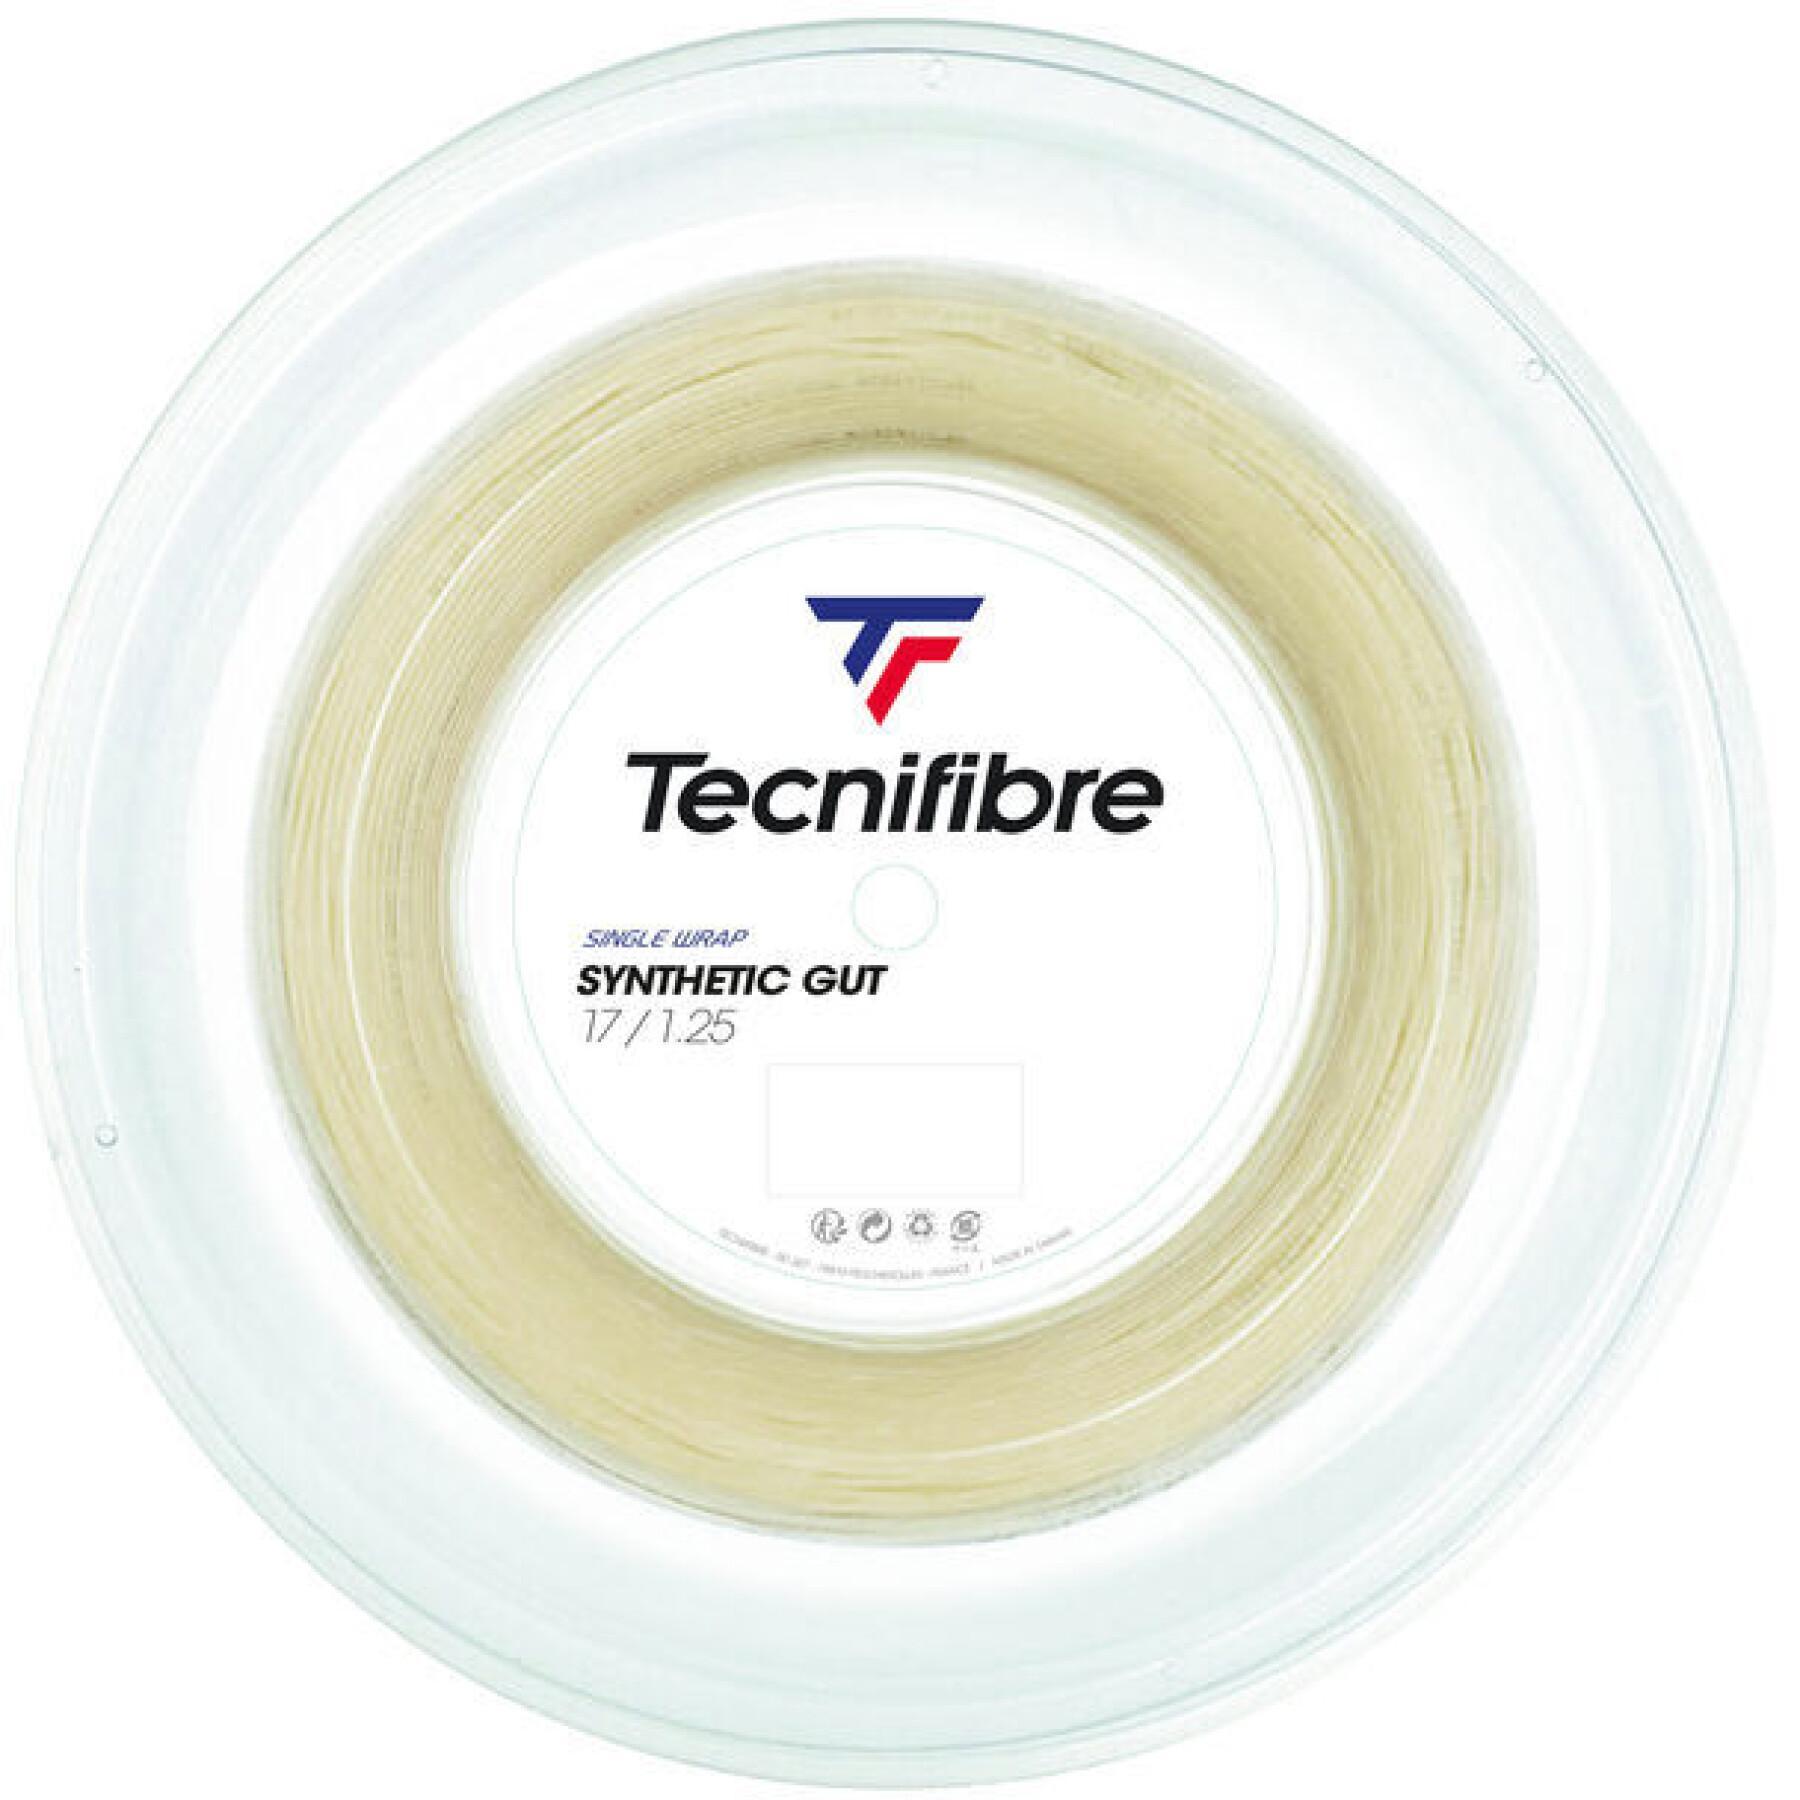 Corde da tennis Tecnifibre Synthetic Gut 200 m